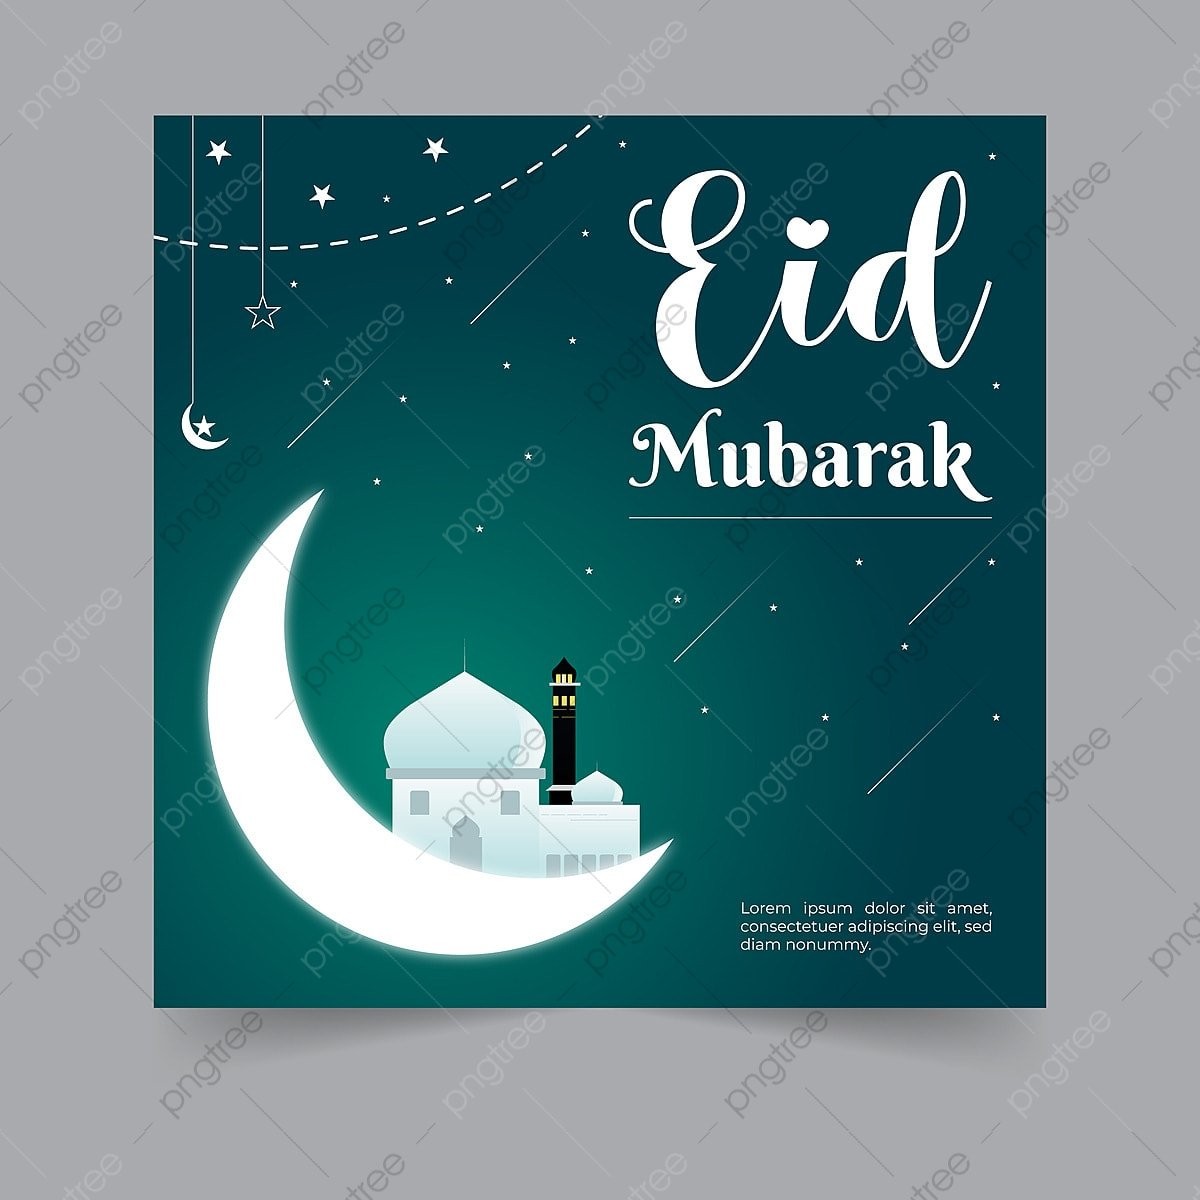 pngtree-eid-mubarak-banner-design-or-islamic-social-media-post-png-image_7502664.png